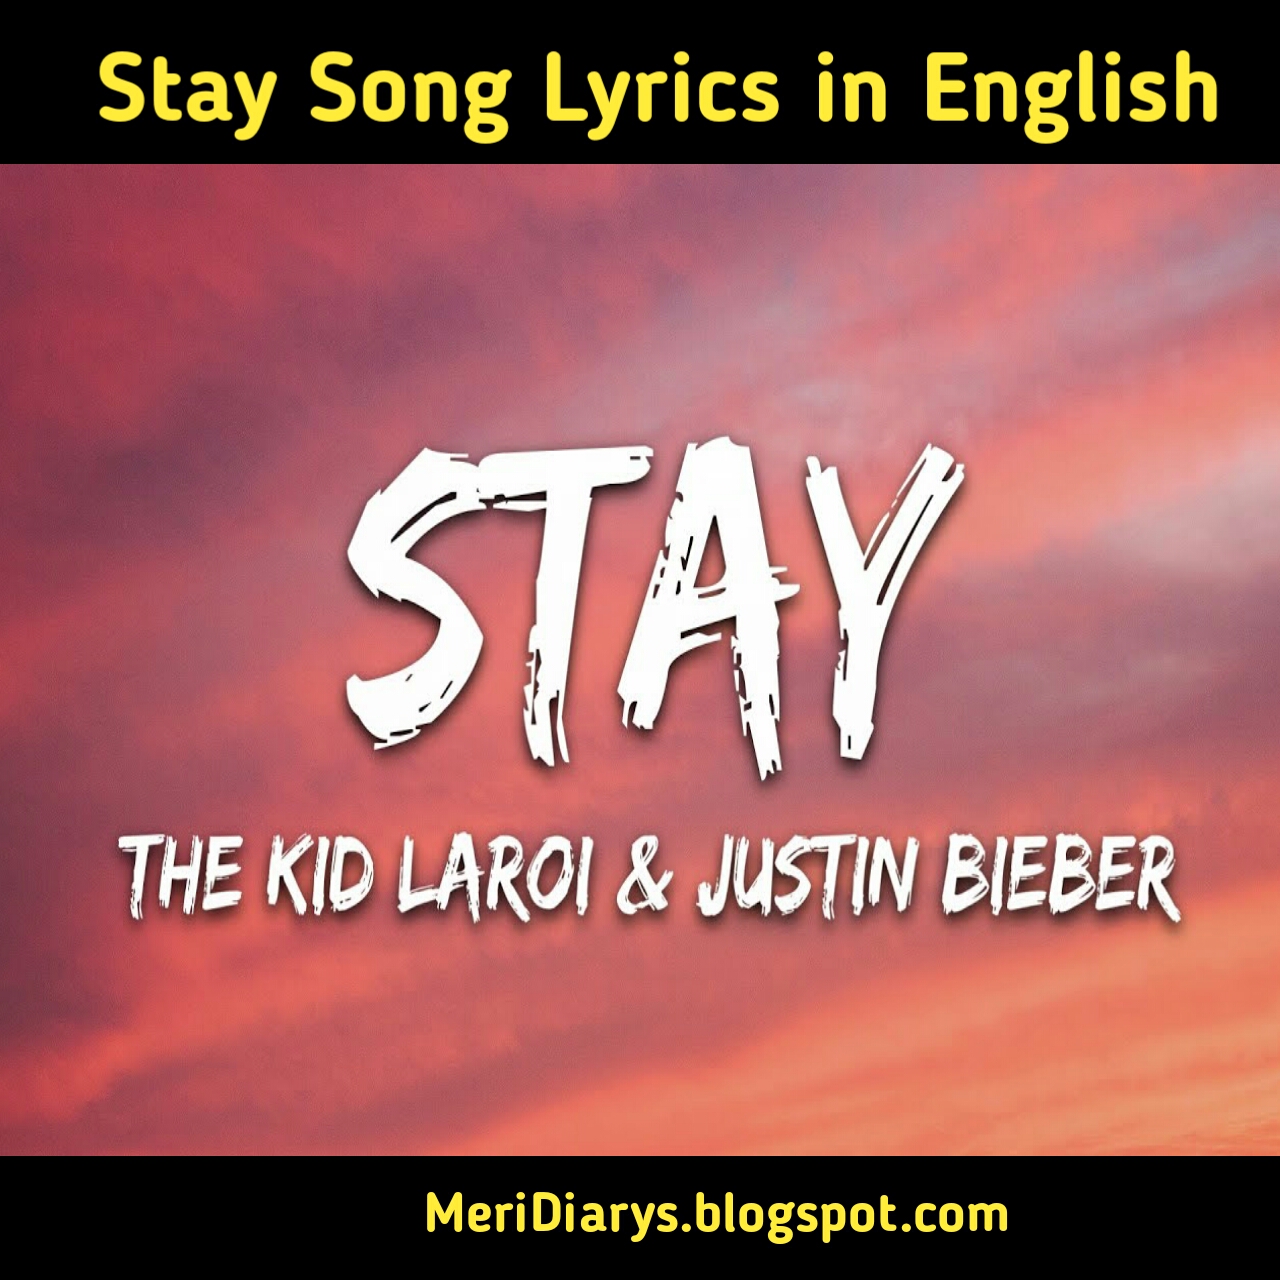 Stay Song Lyrics in English